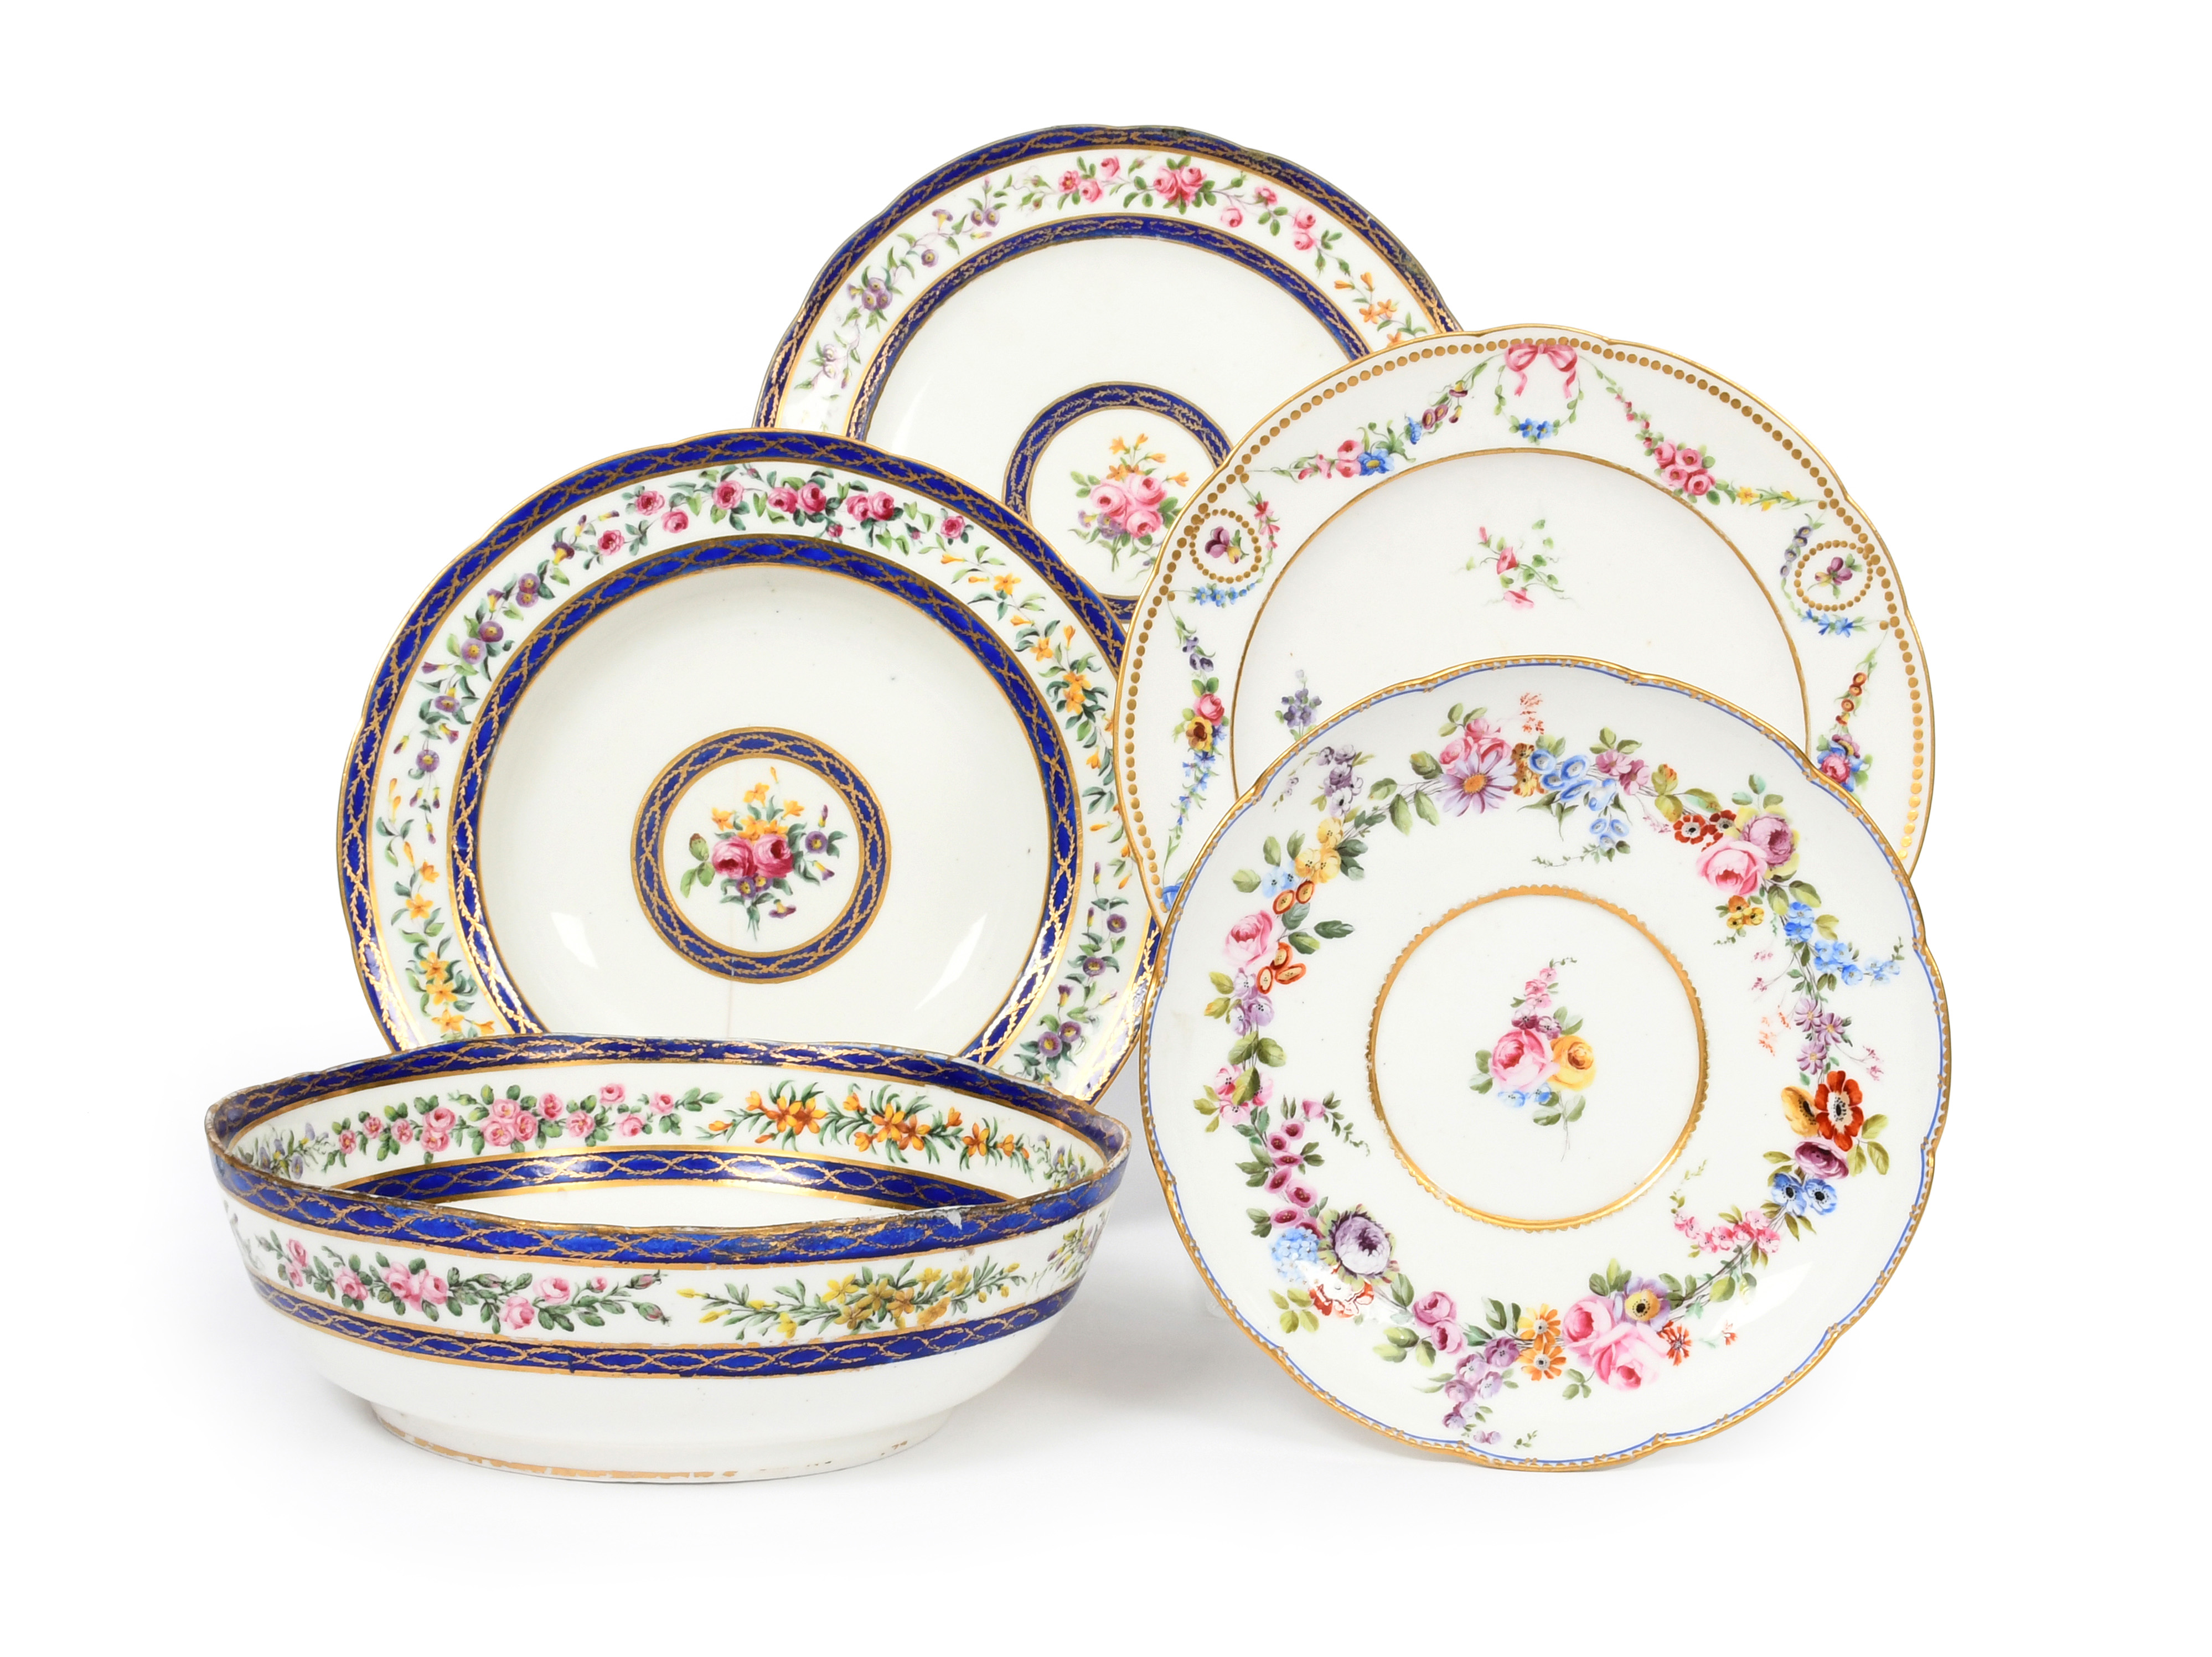 Four Sèvres plates (assiettes) and a bowl (compotier) c.1760-92, the bowl, one plate and a soup